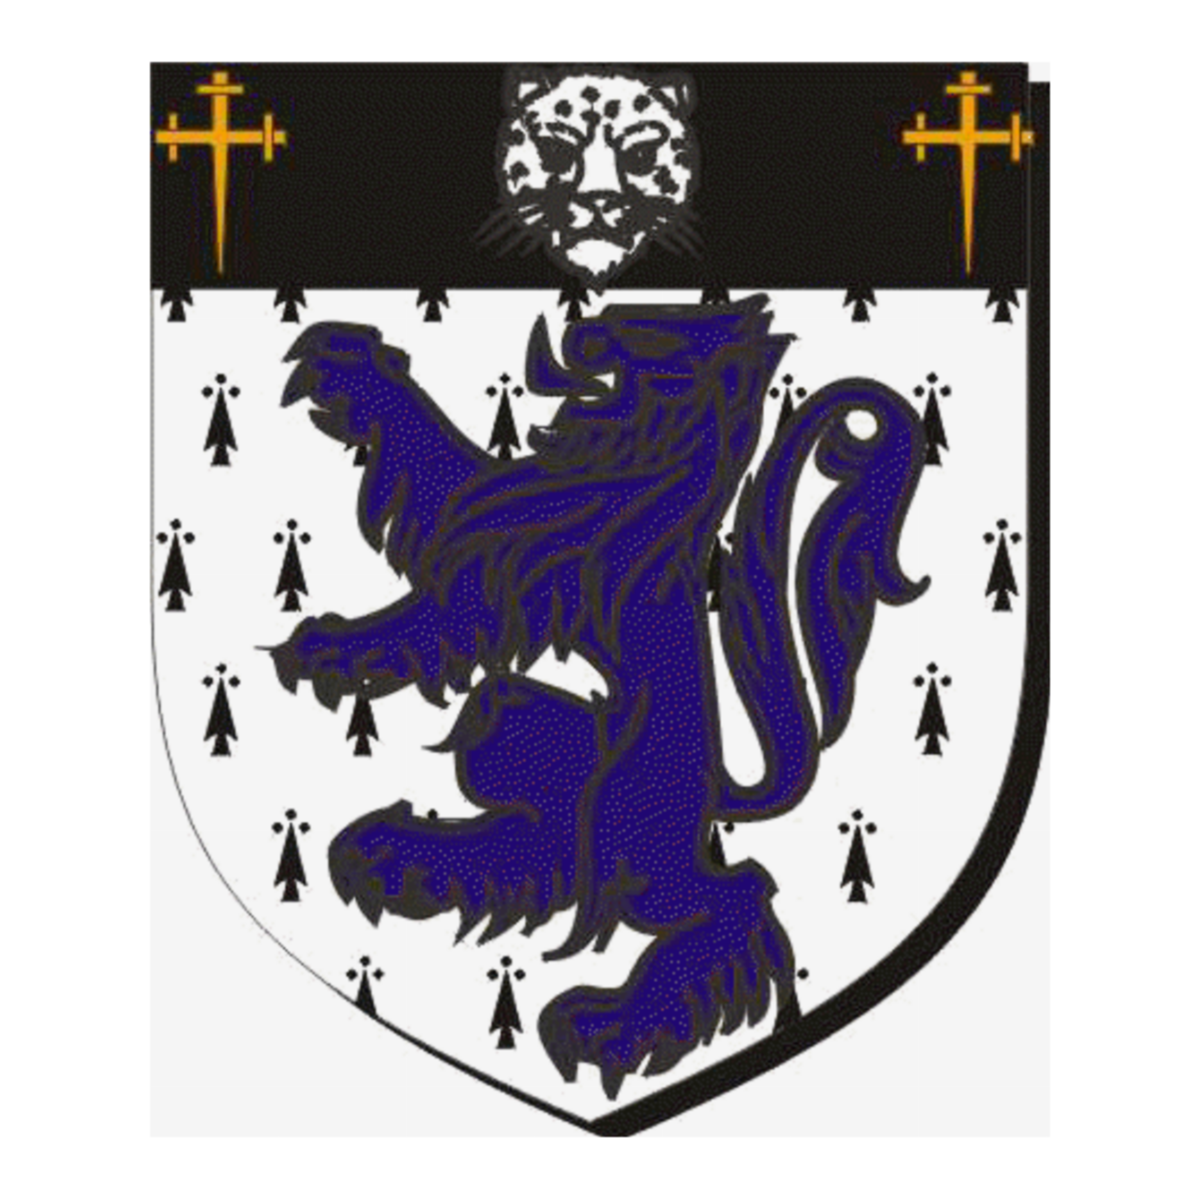 Coat of arms of familyClark